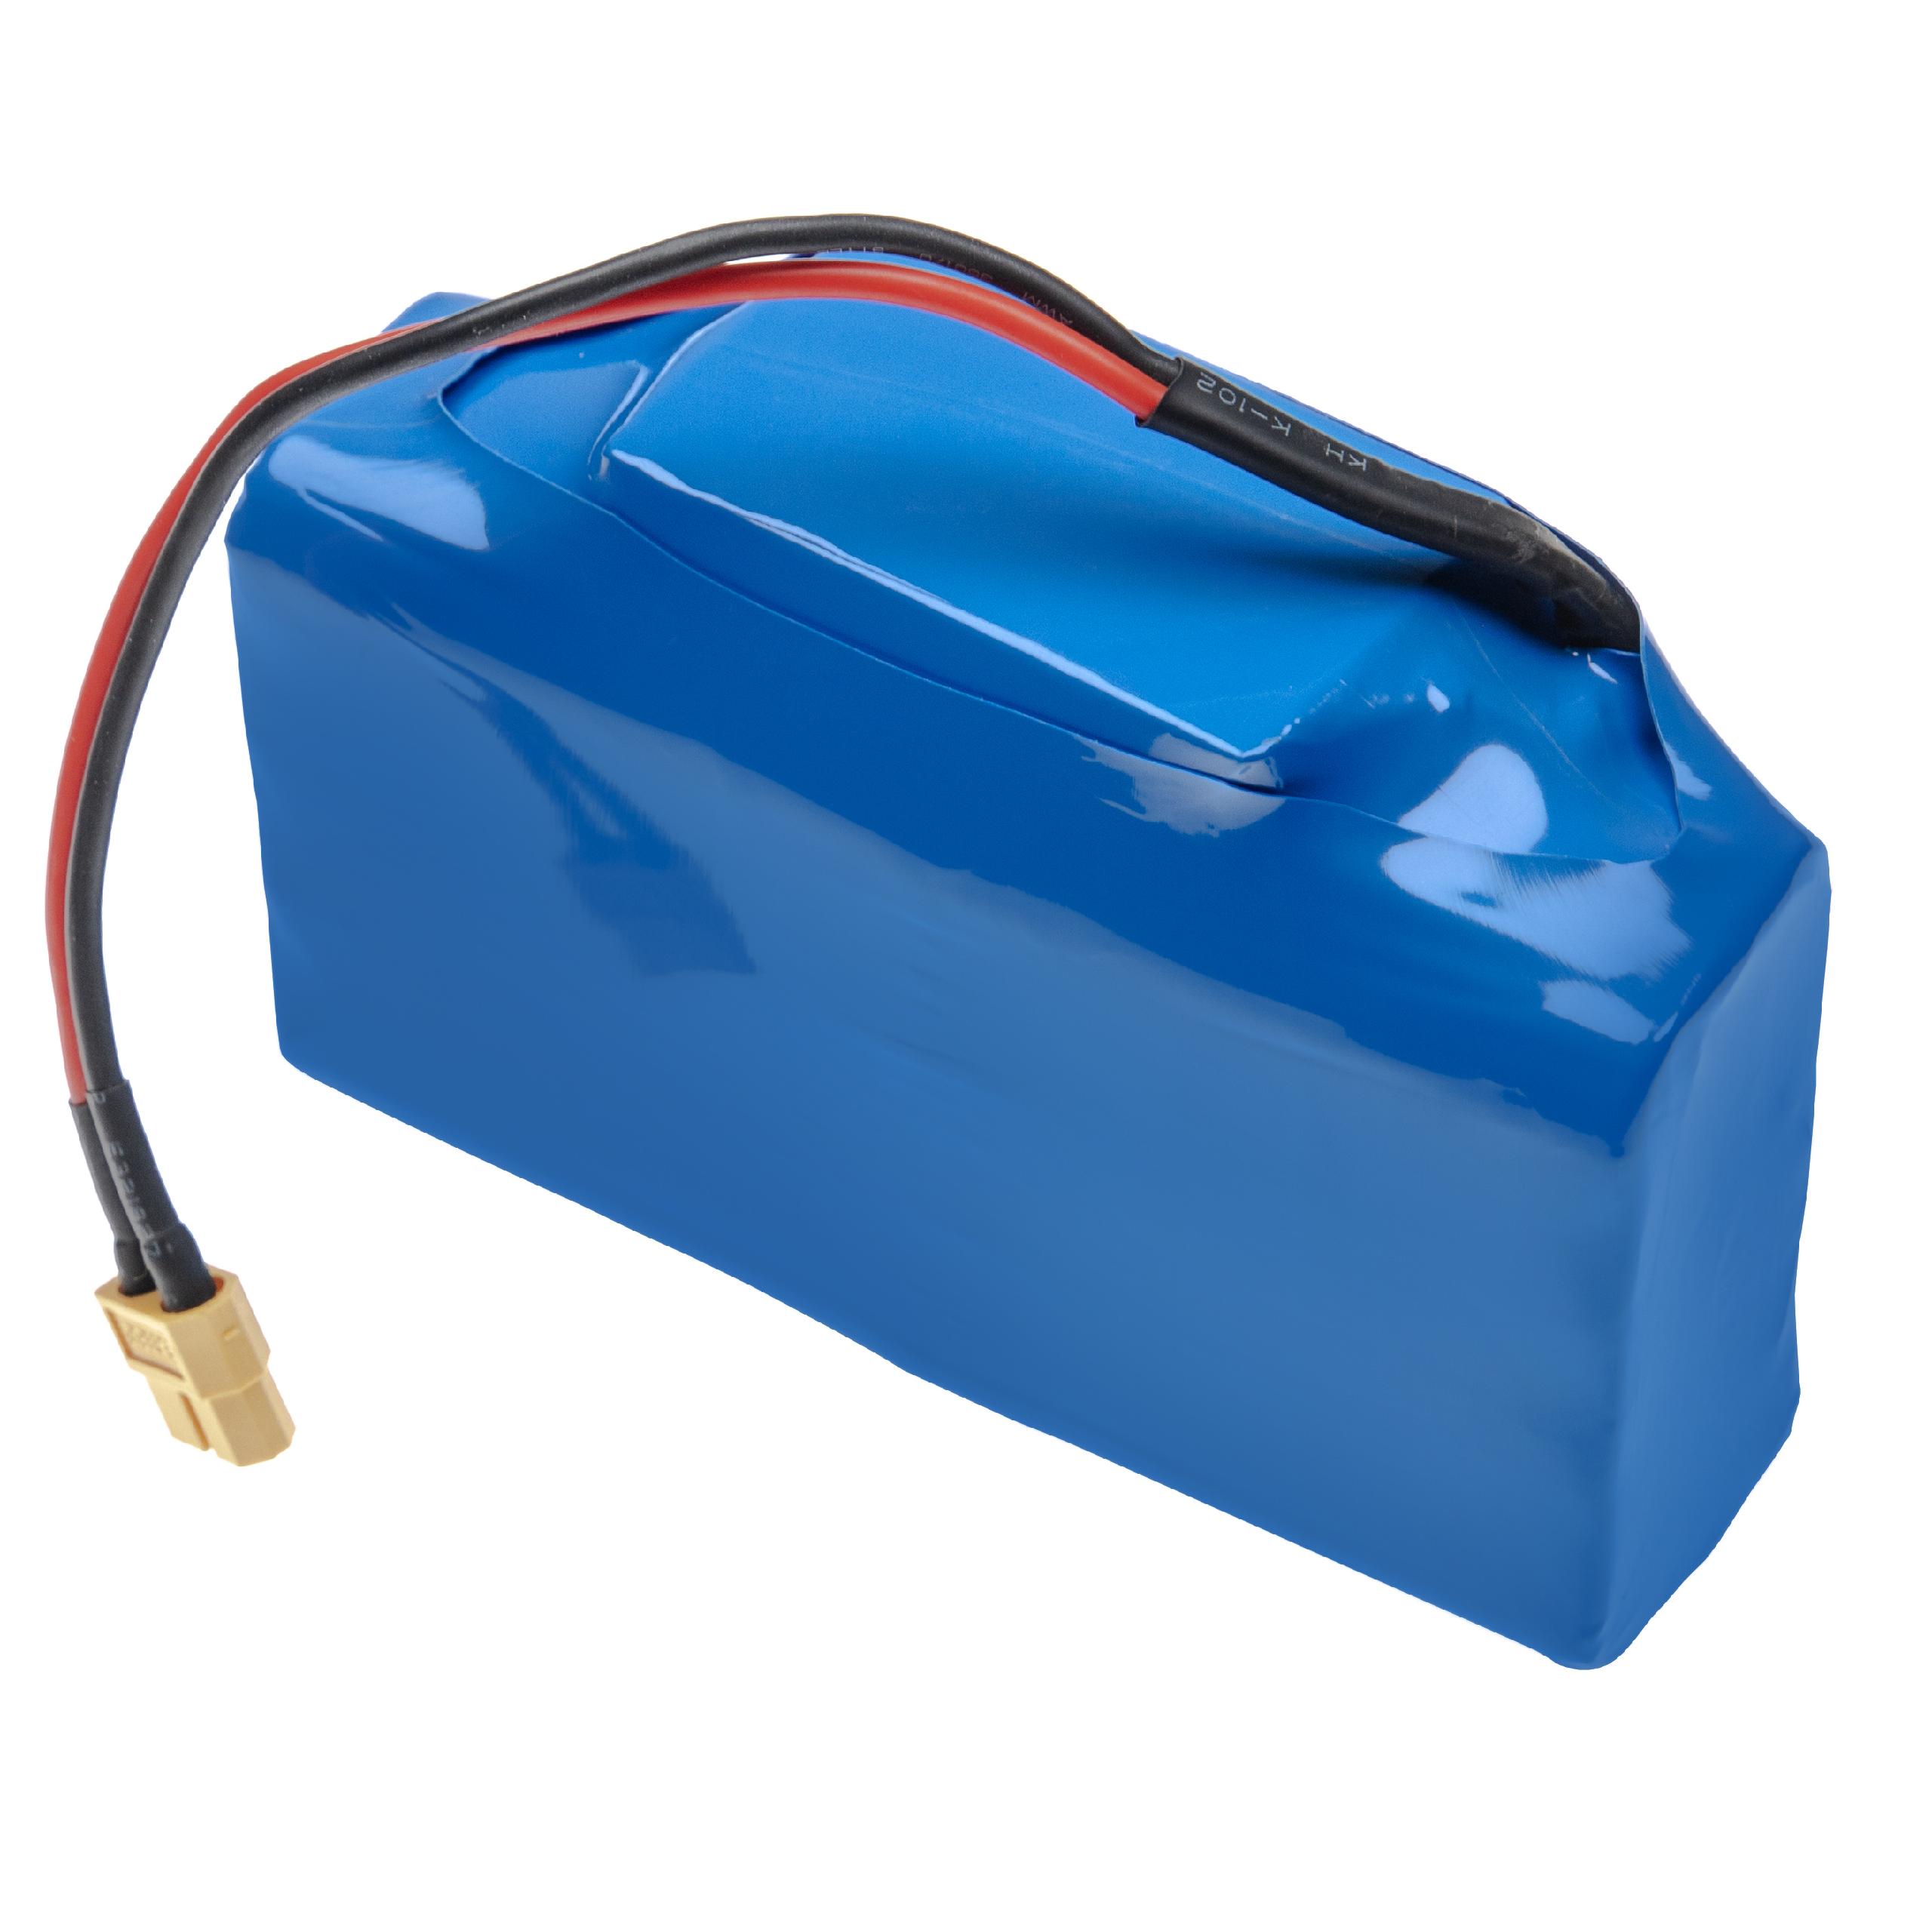 Akumulator do hoverboard zam. Bluewheel 10IXR19/65-2, HPK-11 - 6800 mAh 36 V Li-Ion